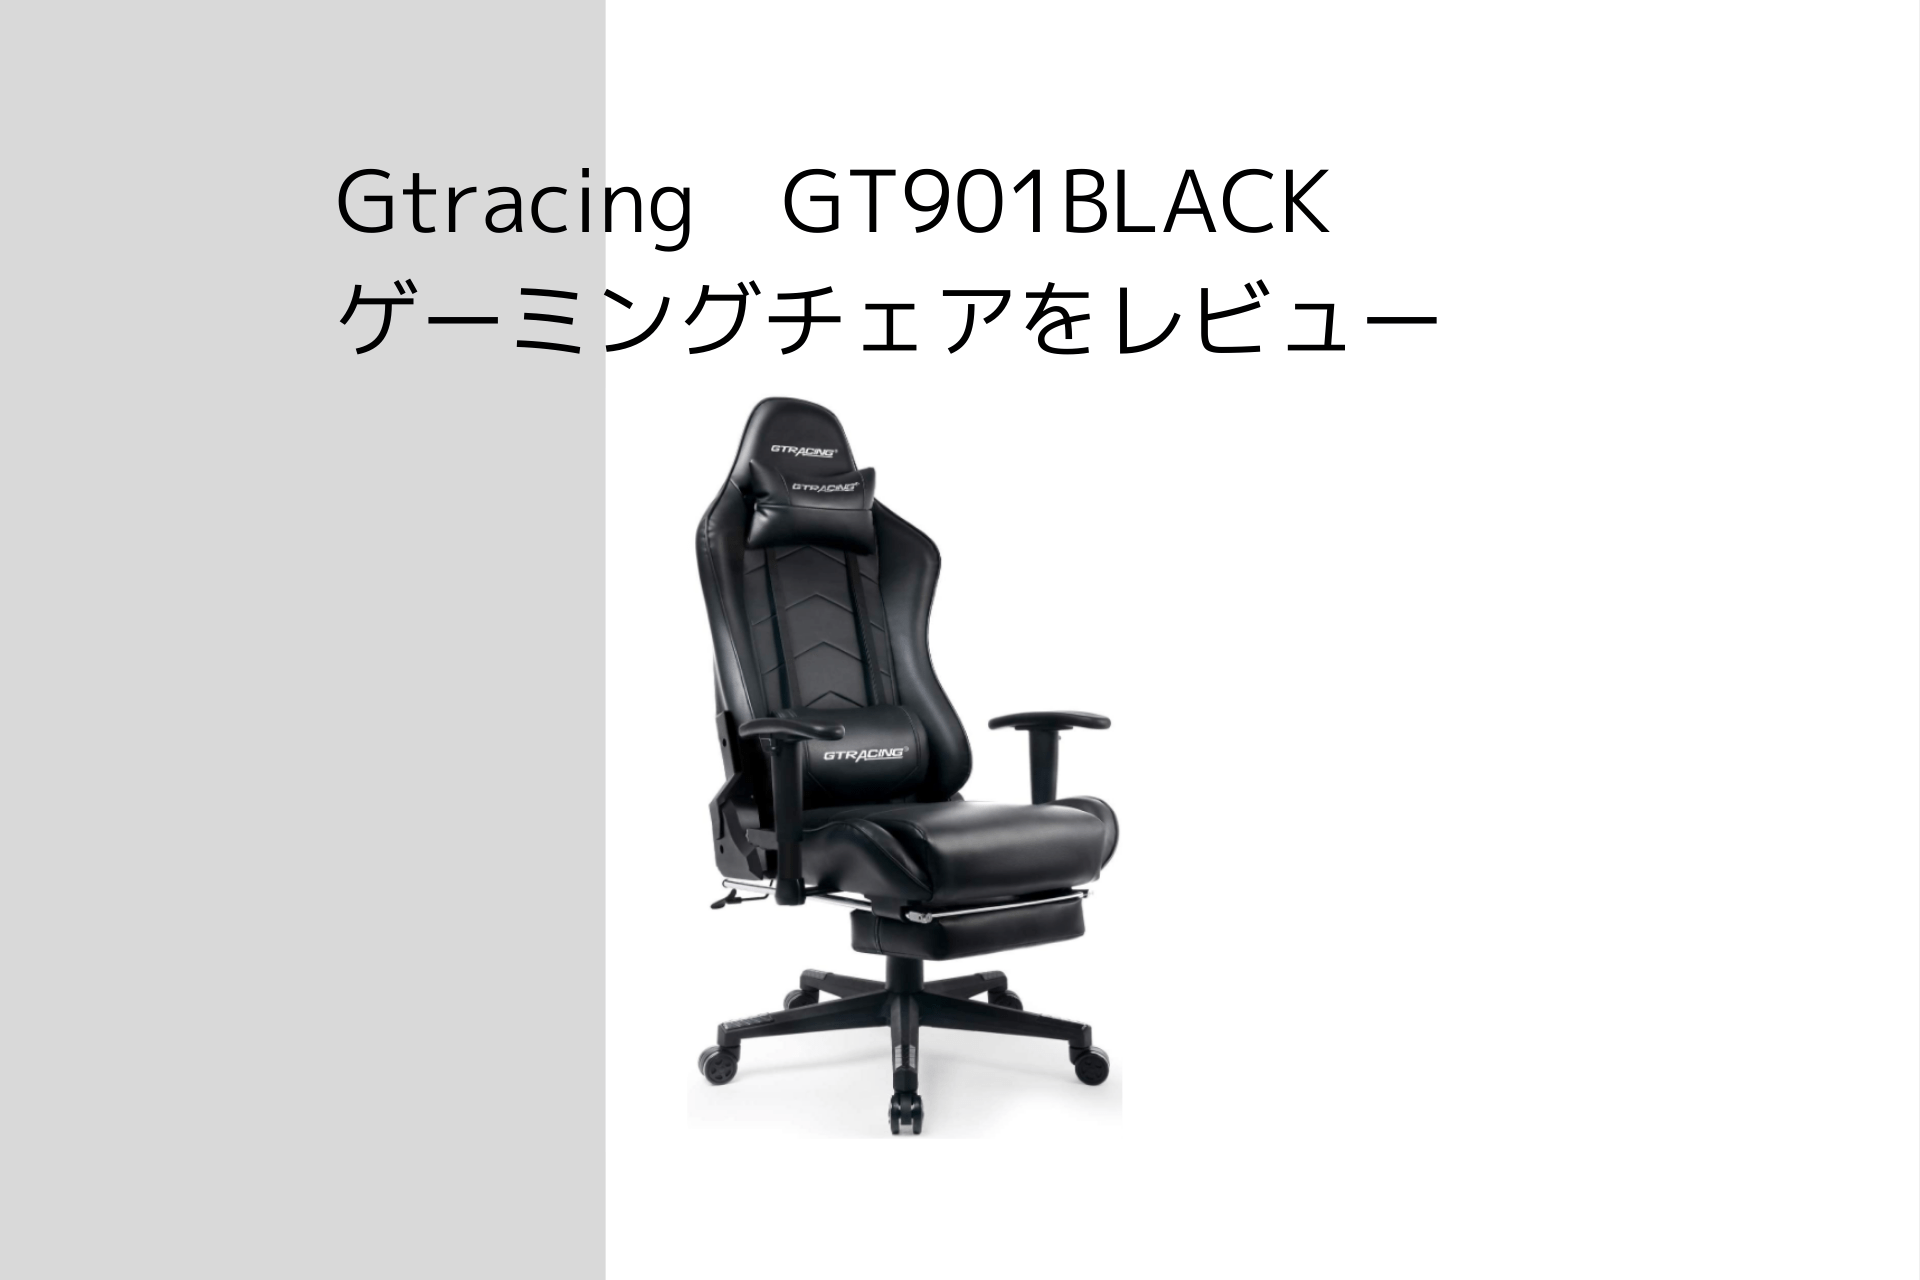 Gtracing】GT901BLACK ゲーミングチェアをレビュー【初めての方におすすめです】